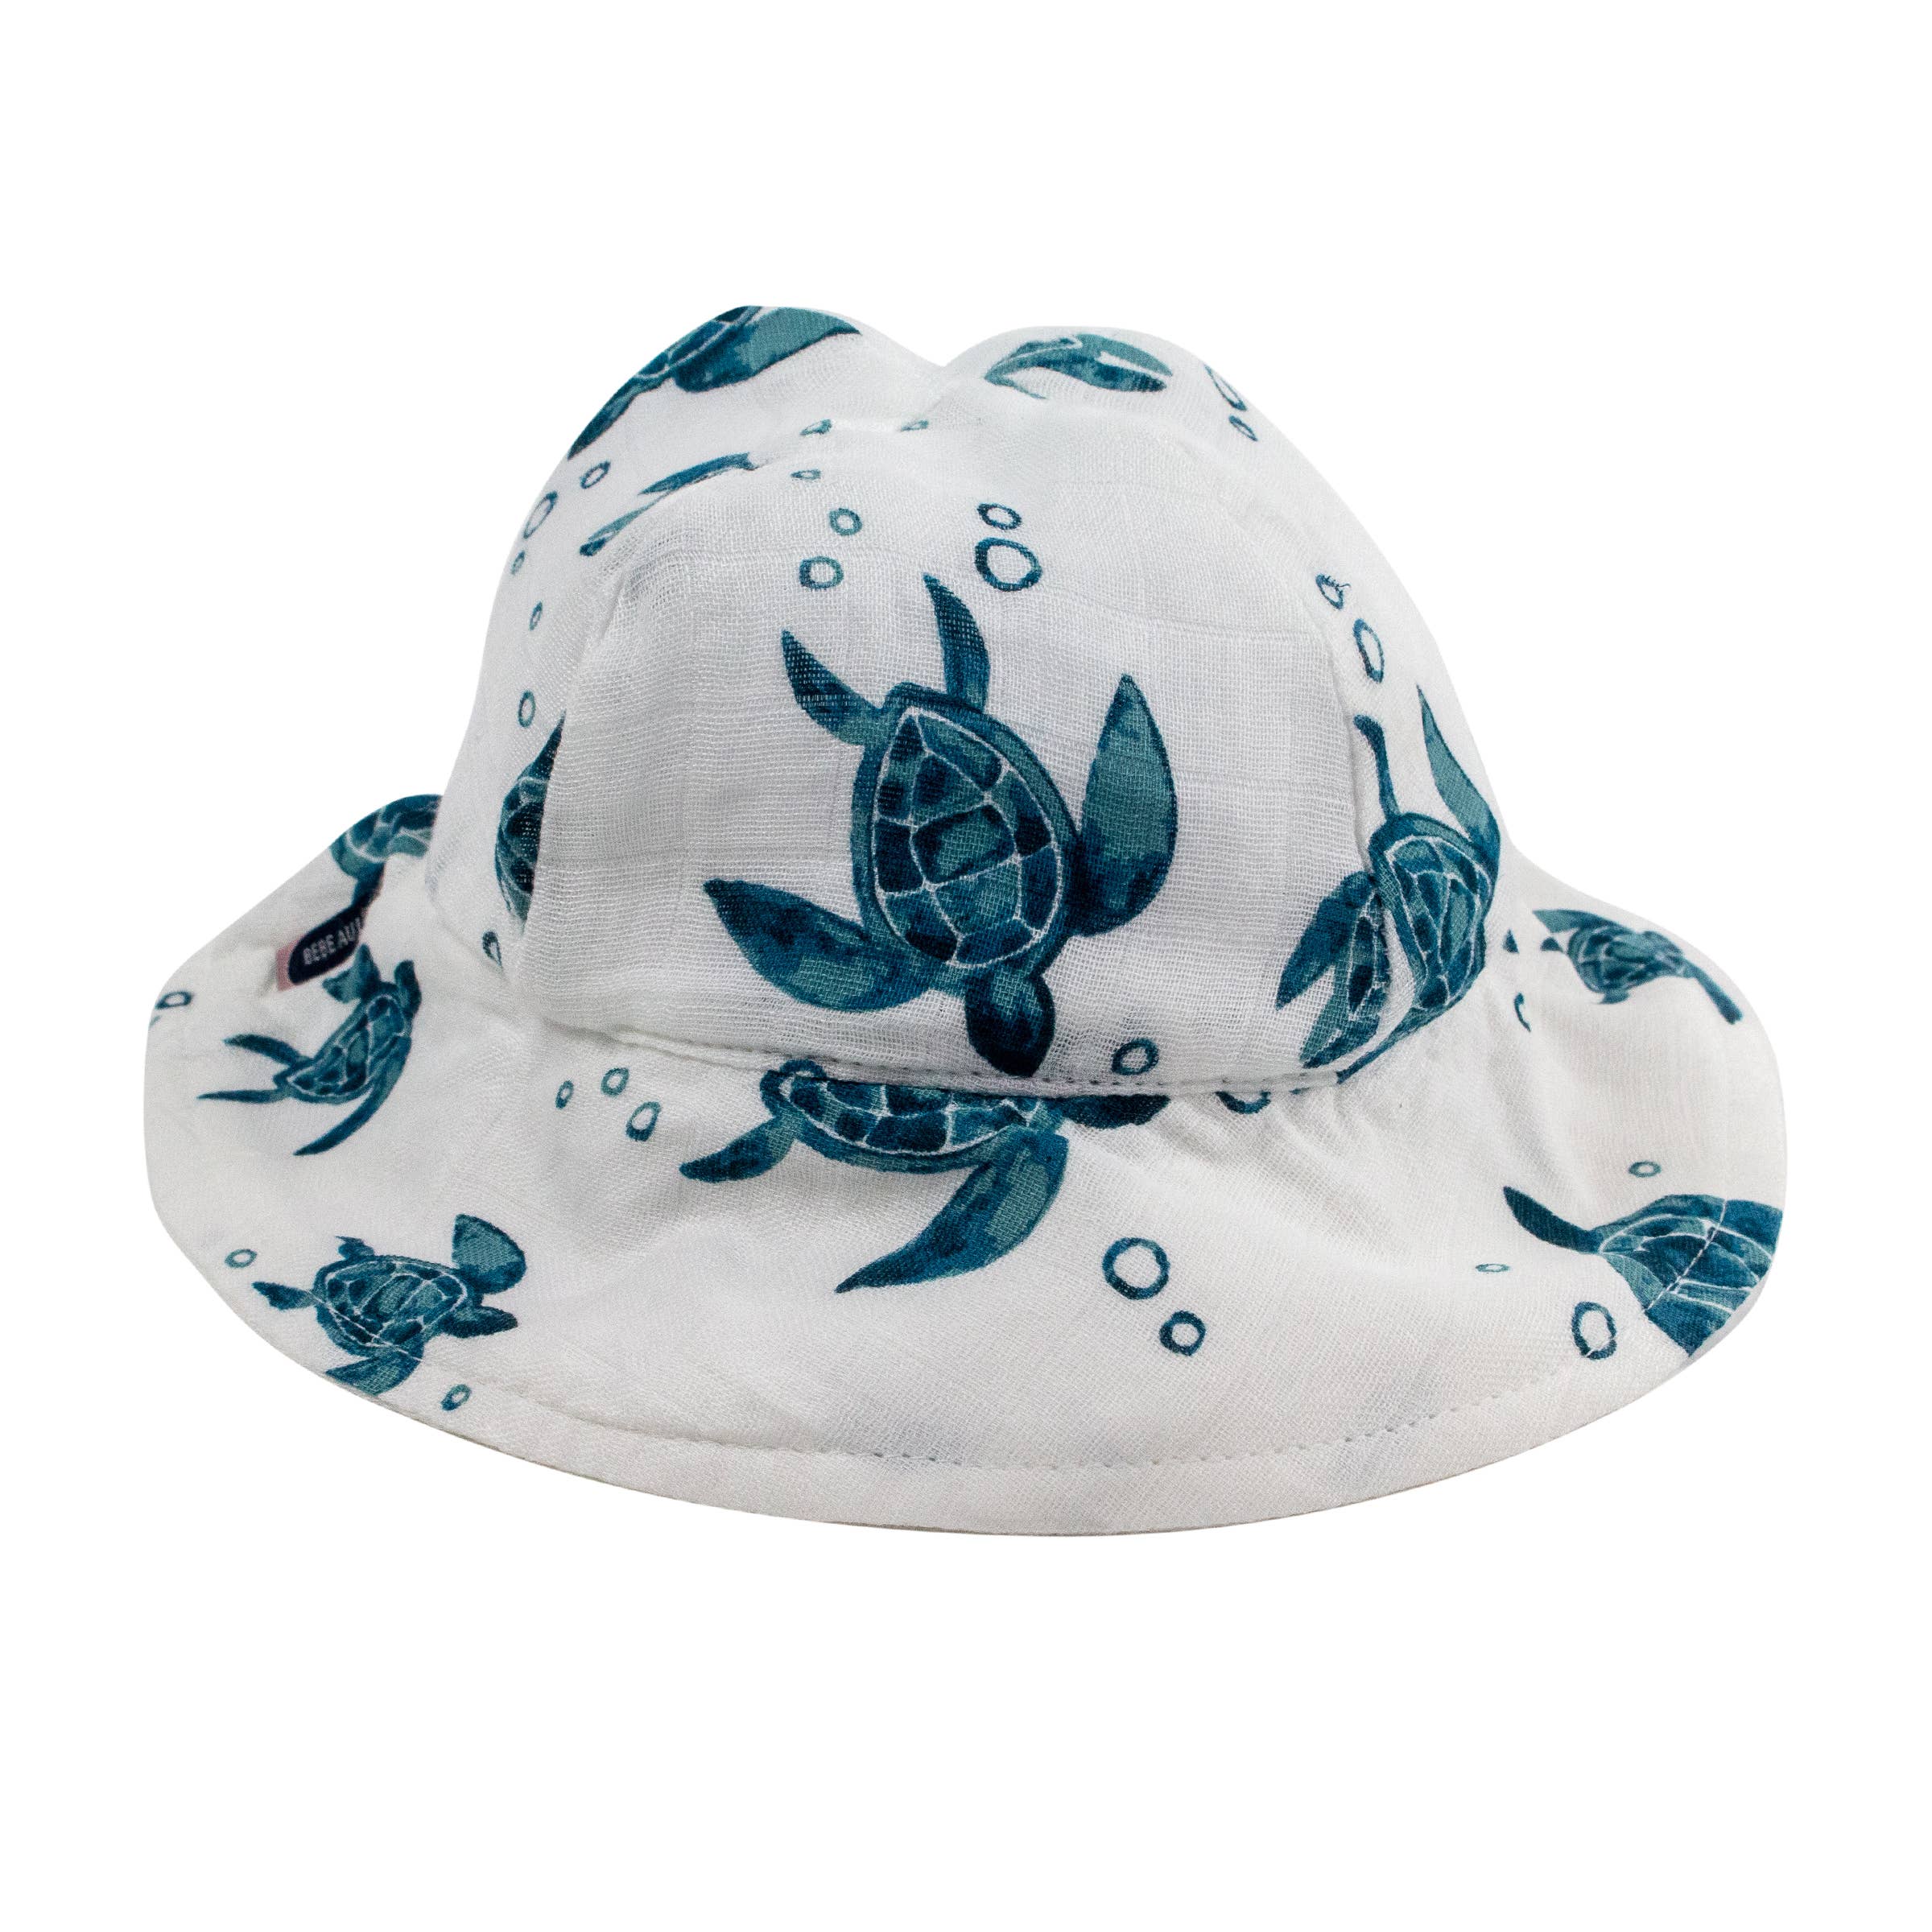 Sea Turtles Oh-So-Soft Muslin Sun Hat